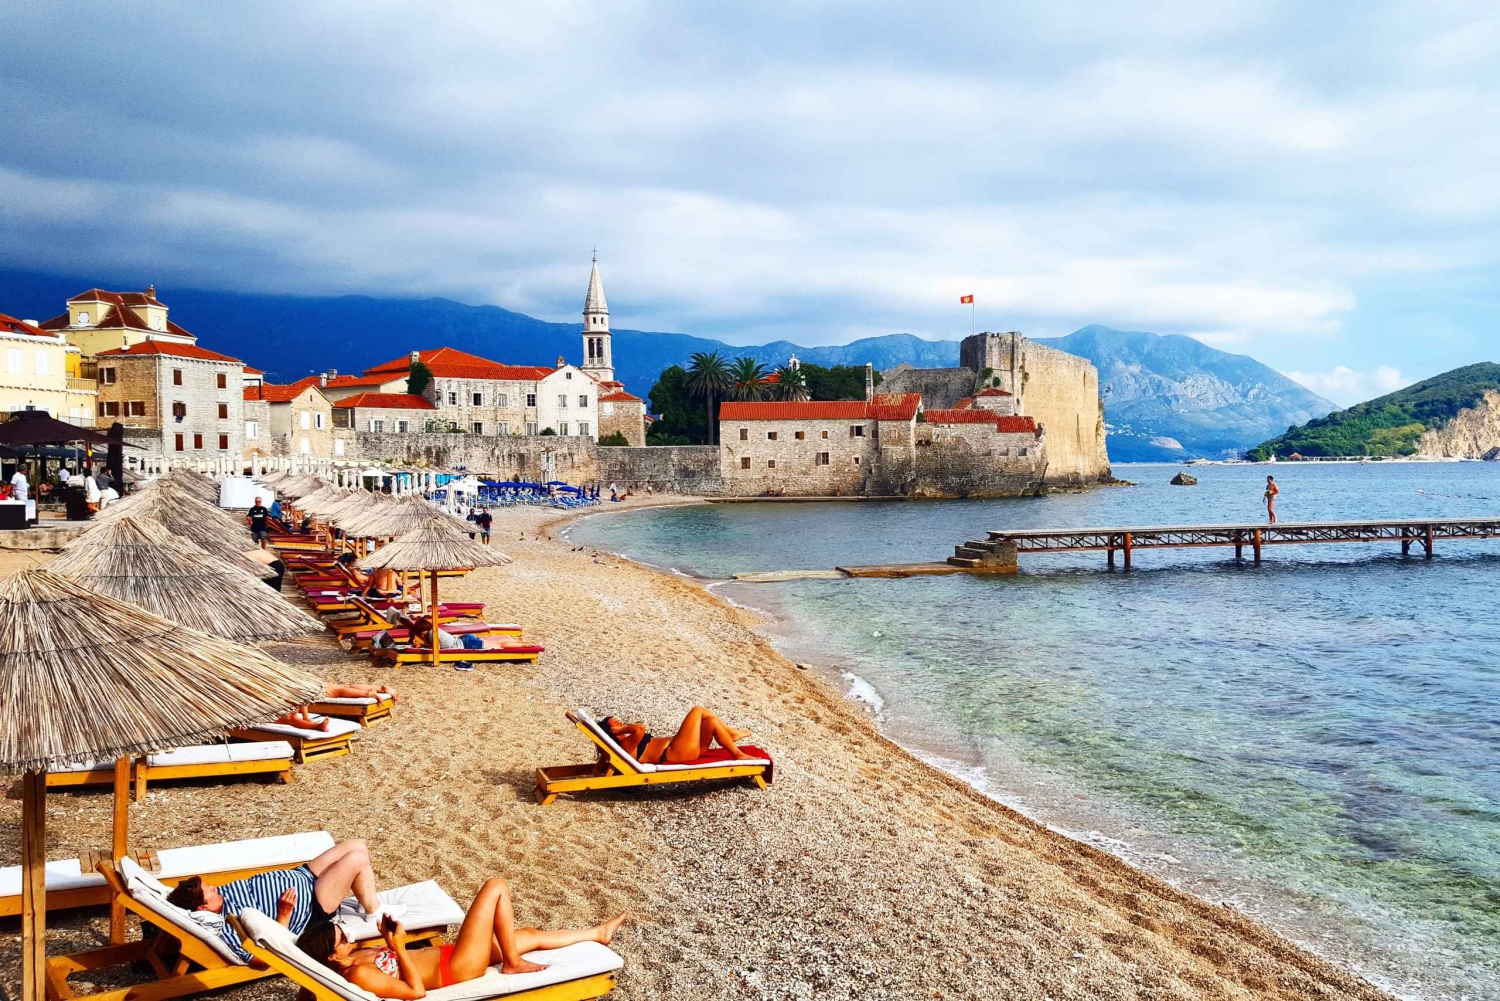 Dubrovnik: Kotor, Perast, Sveti Stefan, and Budva Day Trip